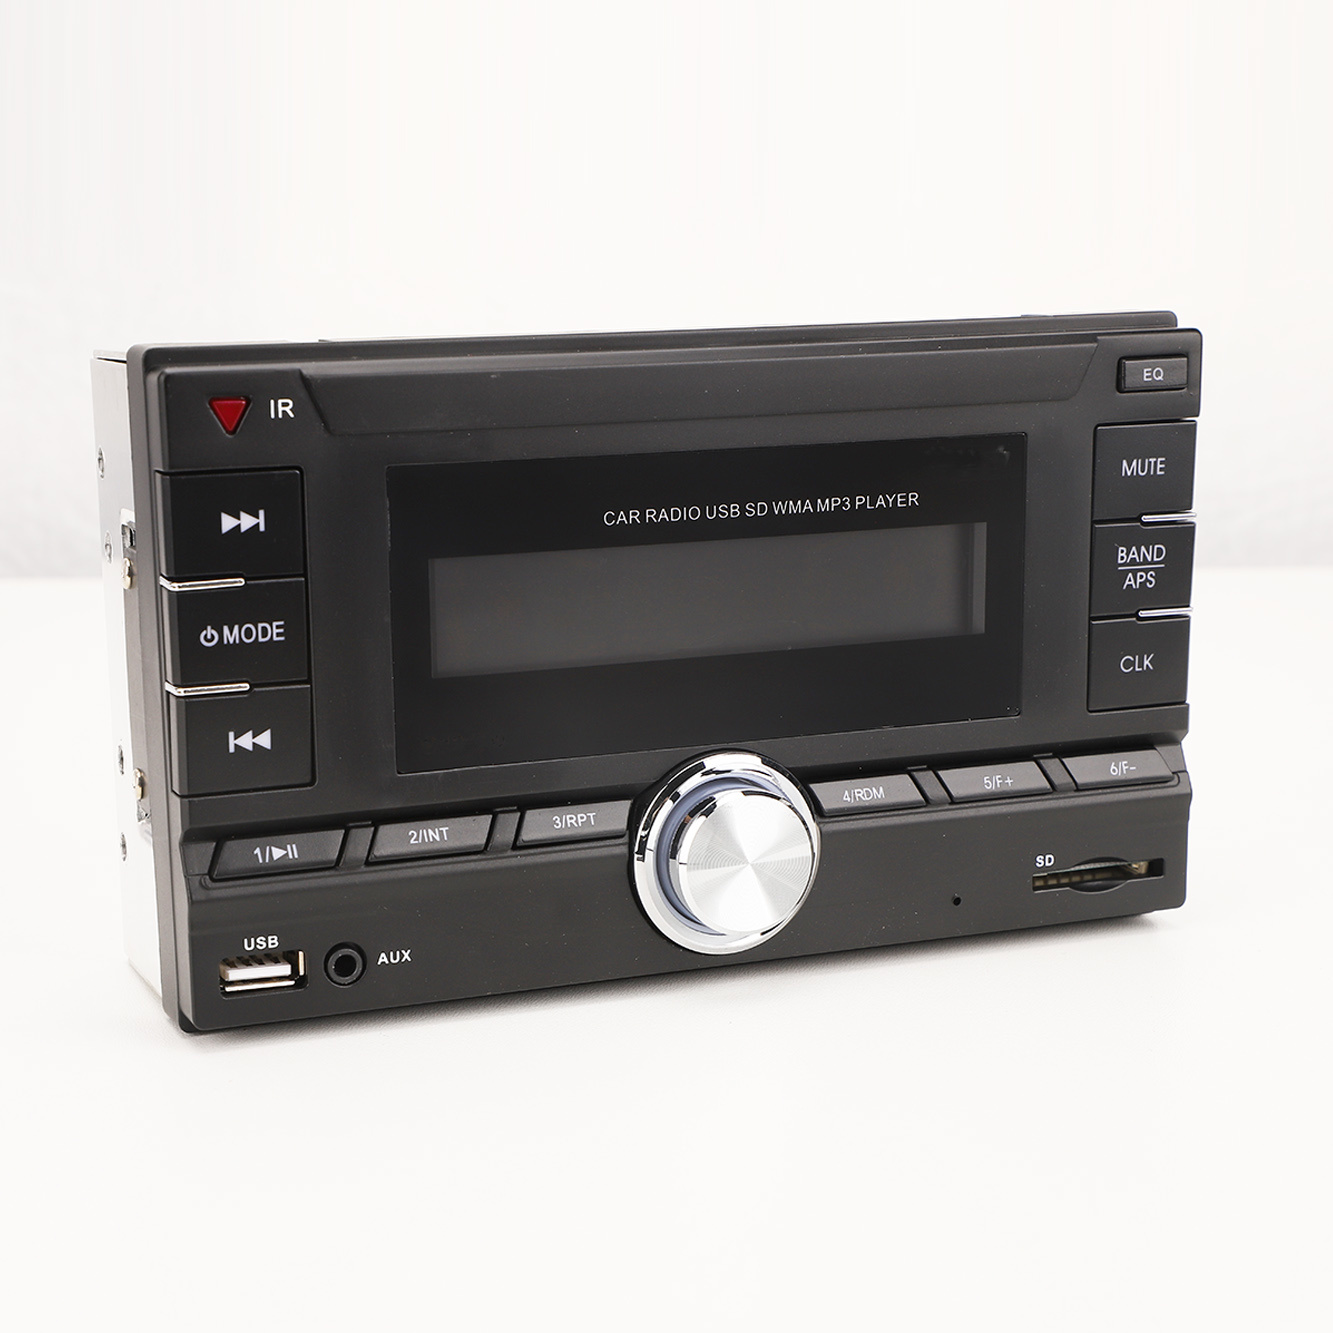 MP3 Player for Car Stereo MP3 on Car Car Radio Car Electronics Auto Audio Car LCD Player Car MP3 Player Double DIN Car MP3 Radio